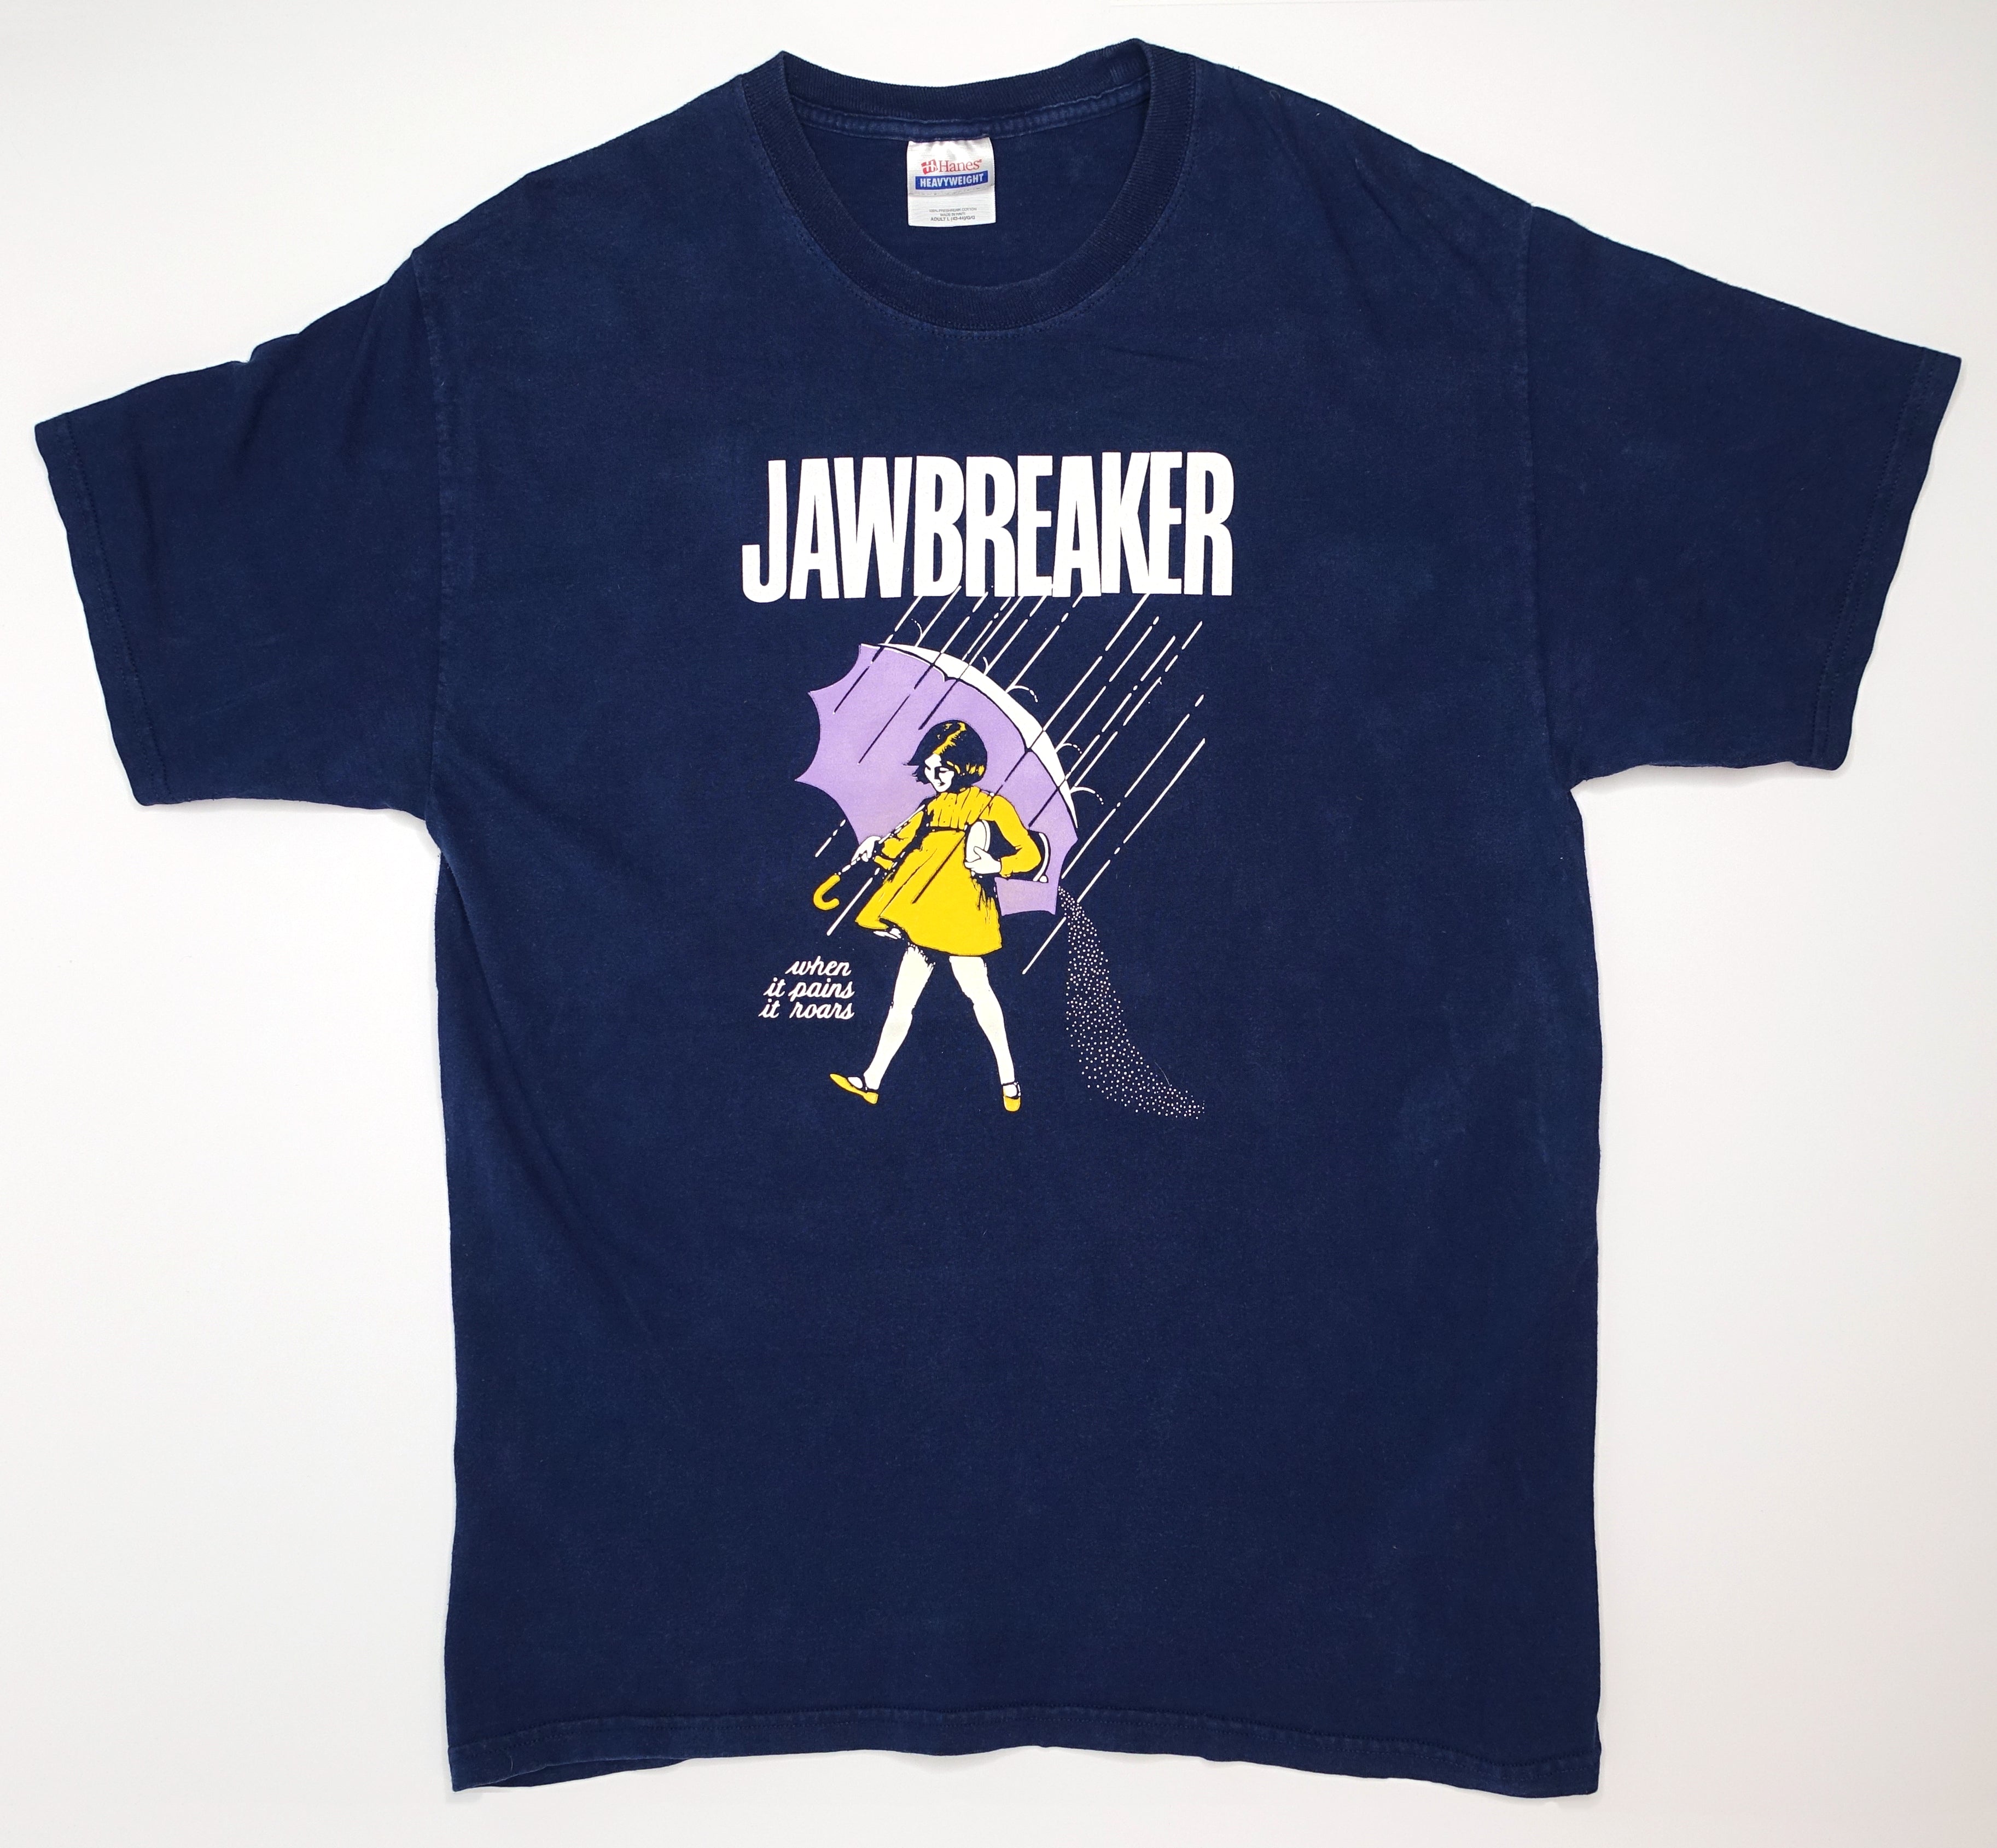 Jawbreaker - When It Pains Its Roars 90's/00's Shirt (Hanes) Size Large